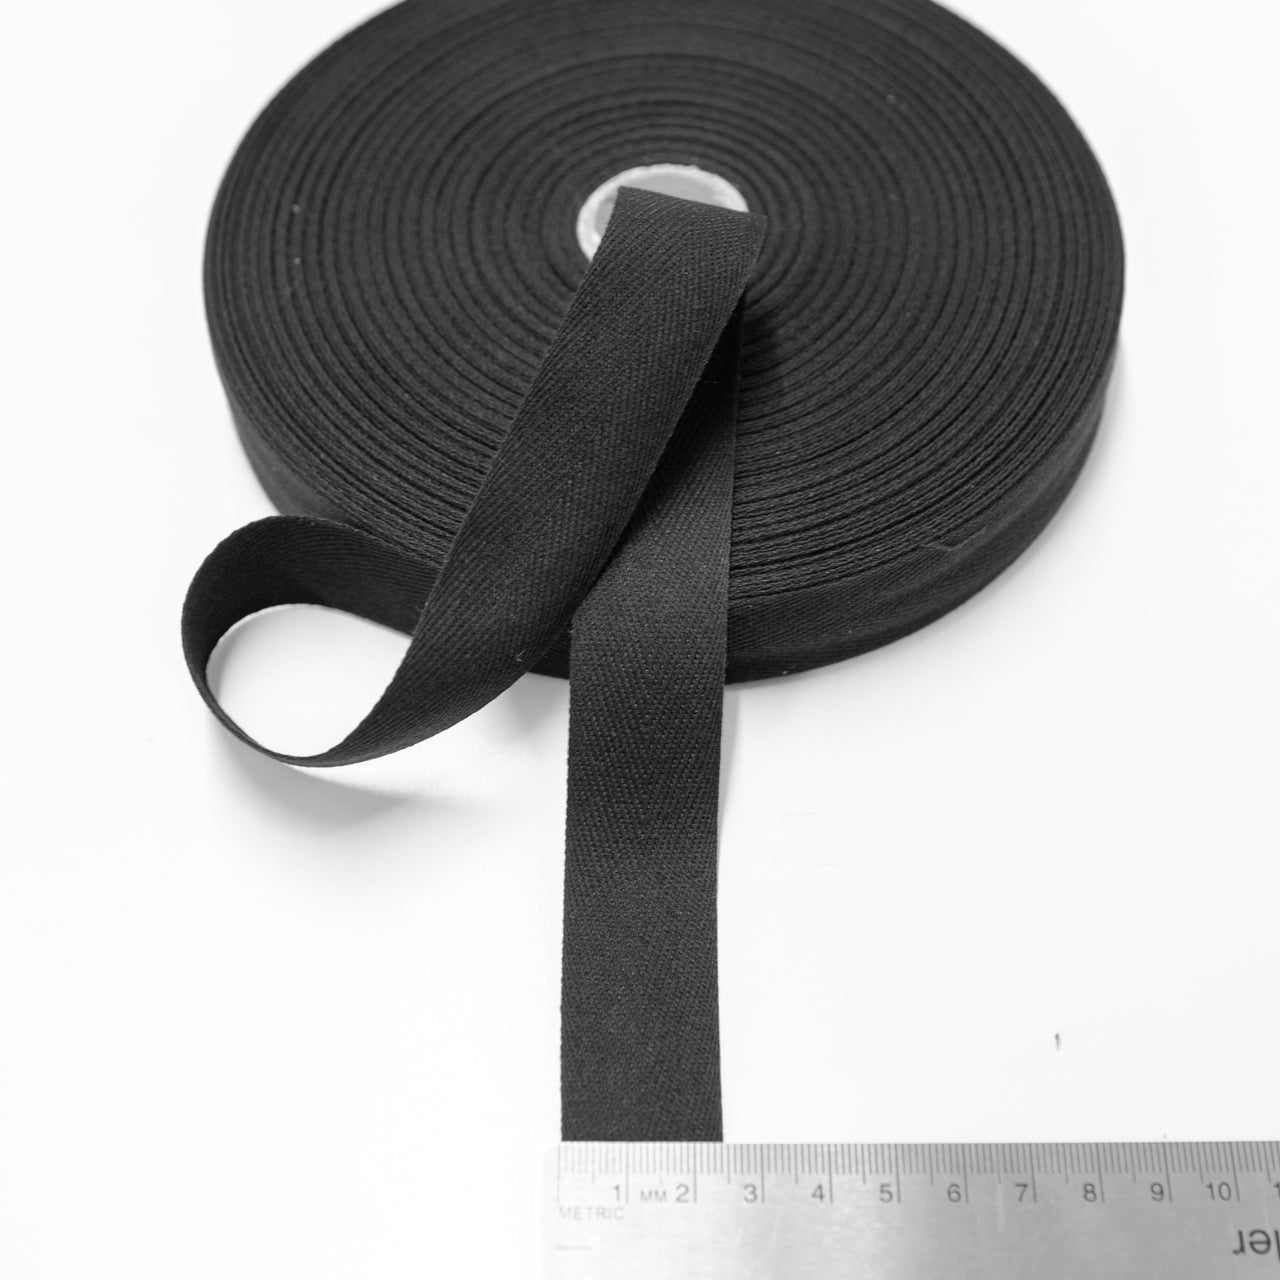 Herringbone Weave Tape, 10m